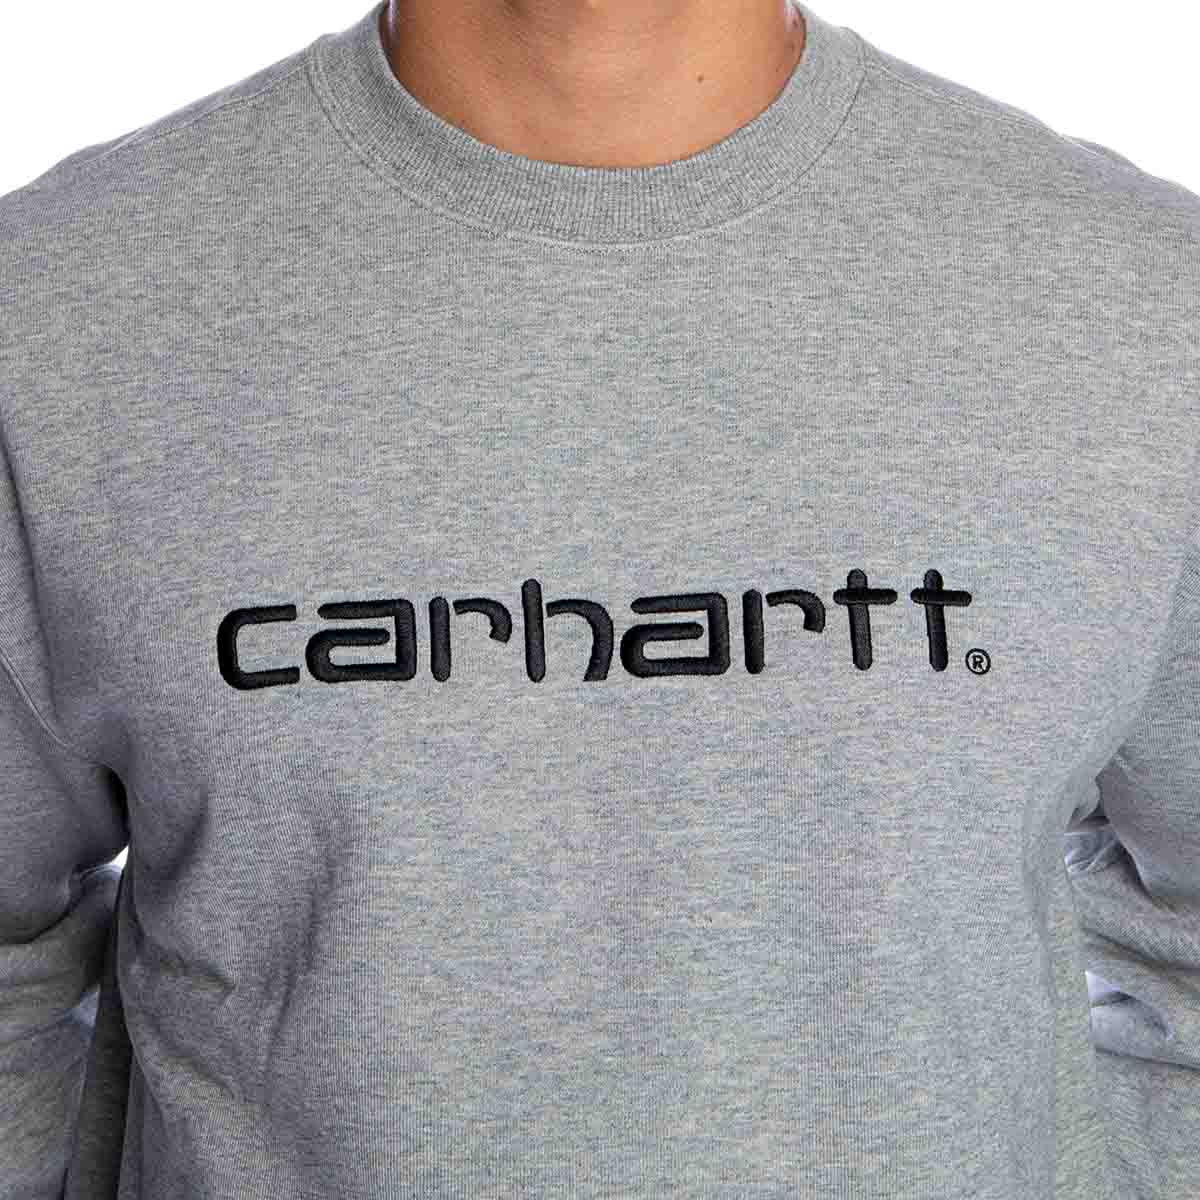 Carhartt WIP Crewneck Carhartt Sweat grey heather/black | Bludshop.com